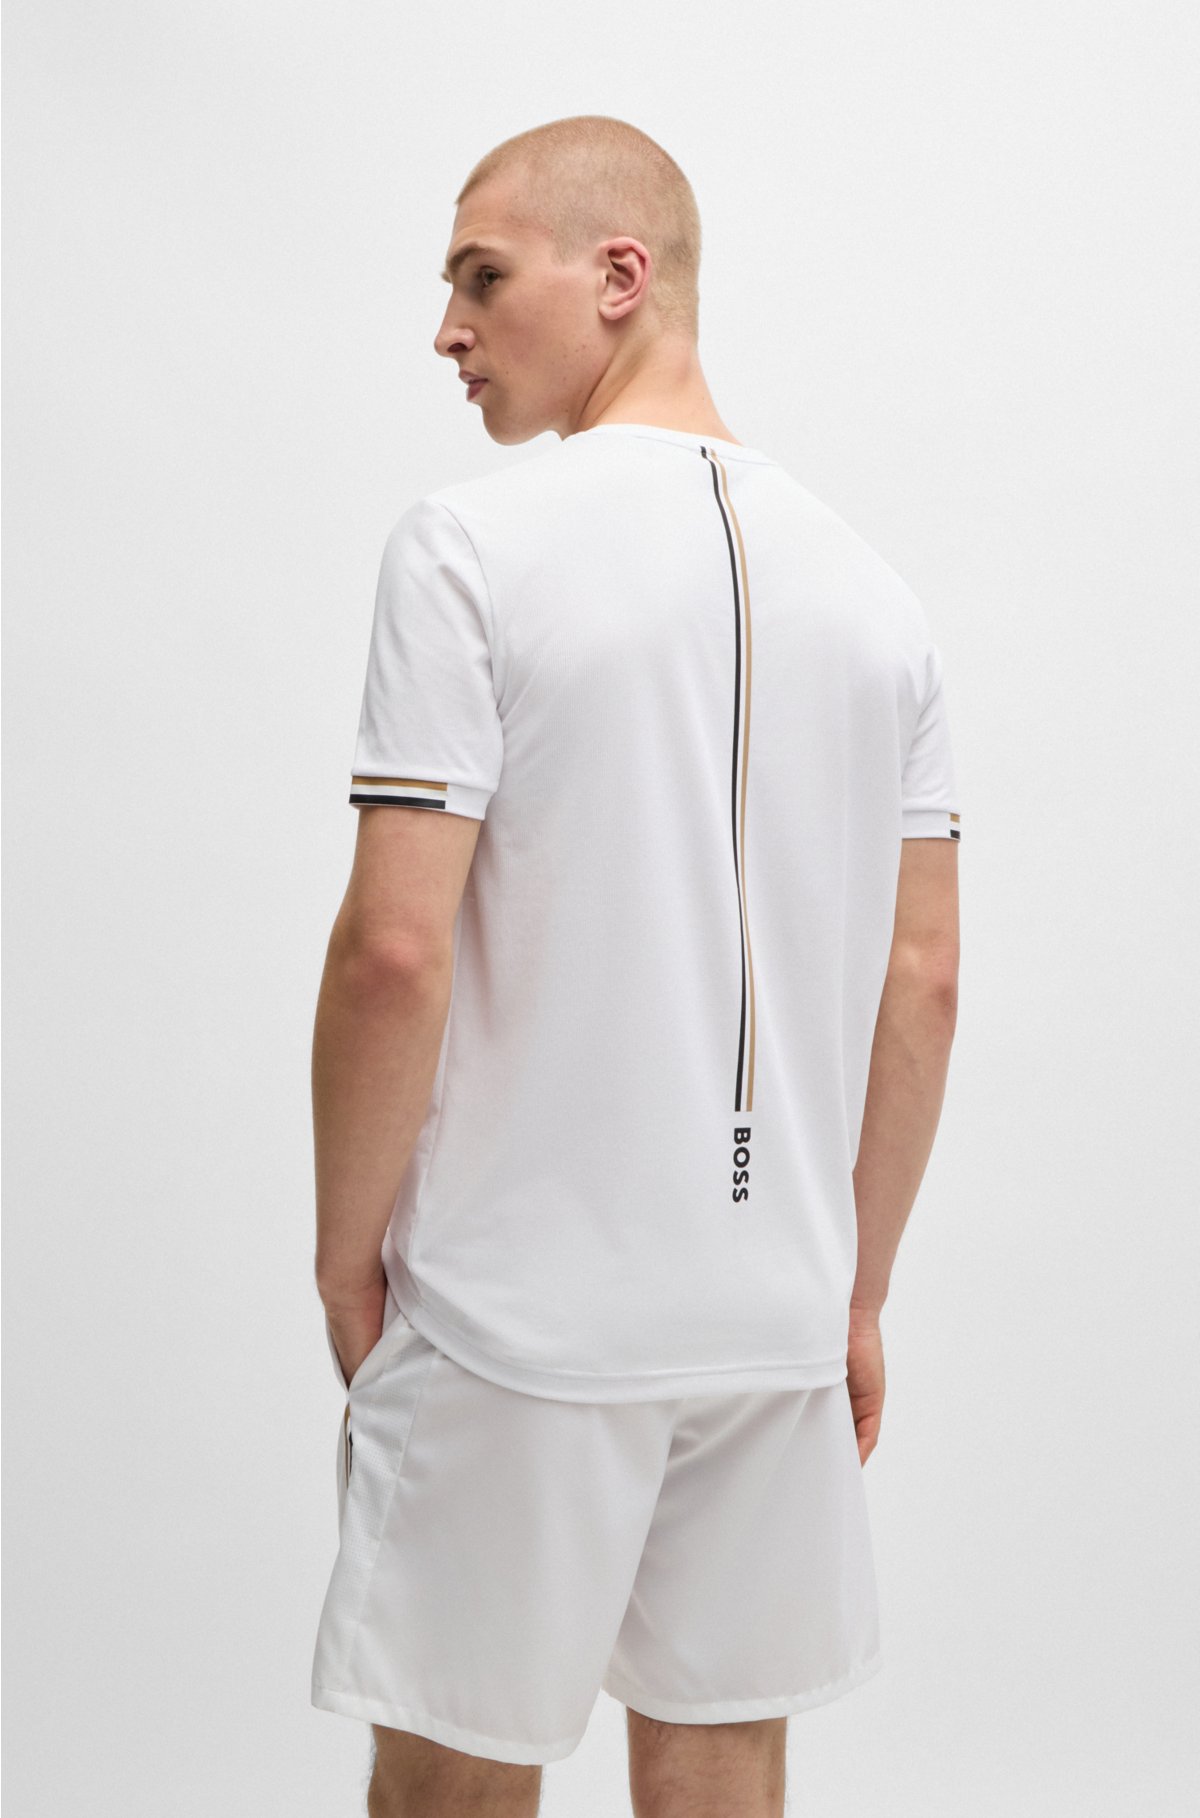 BOSS x Matteo Berrettini waffle-fabric T-shirt with signature-stripe artwork, White